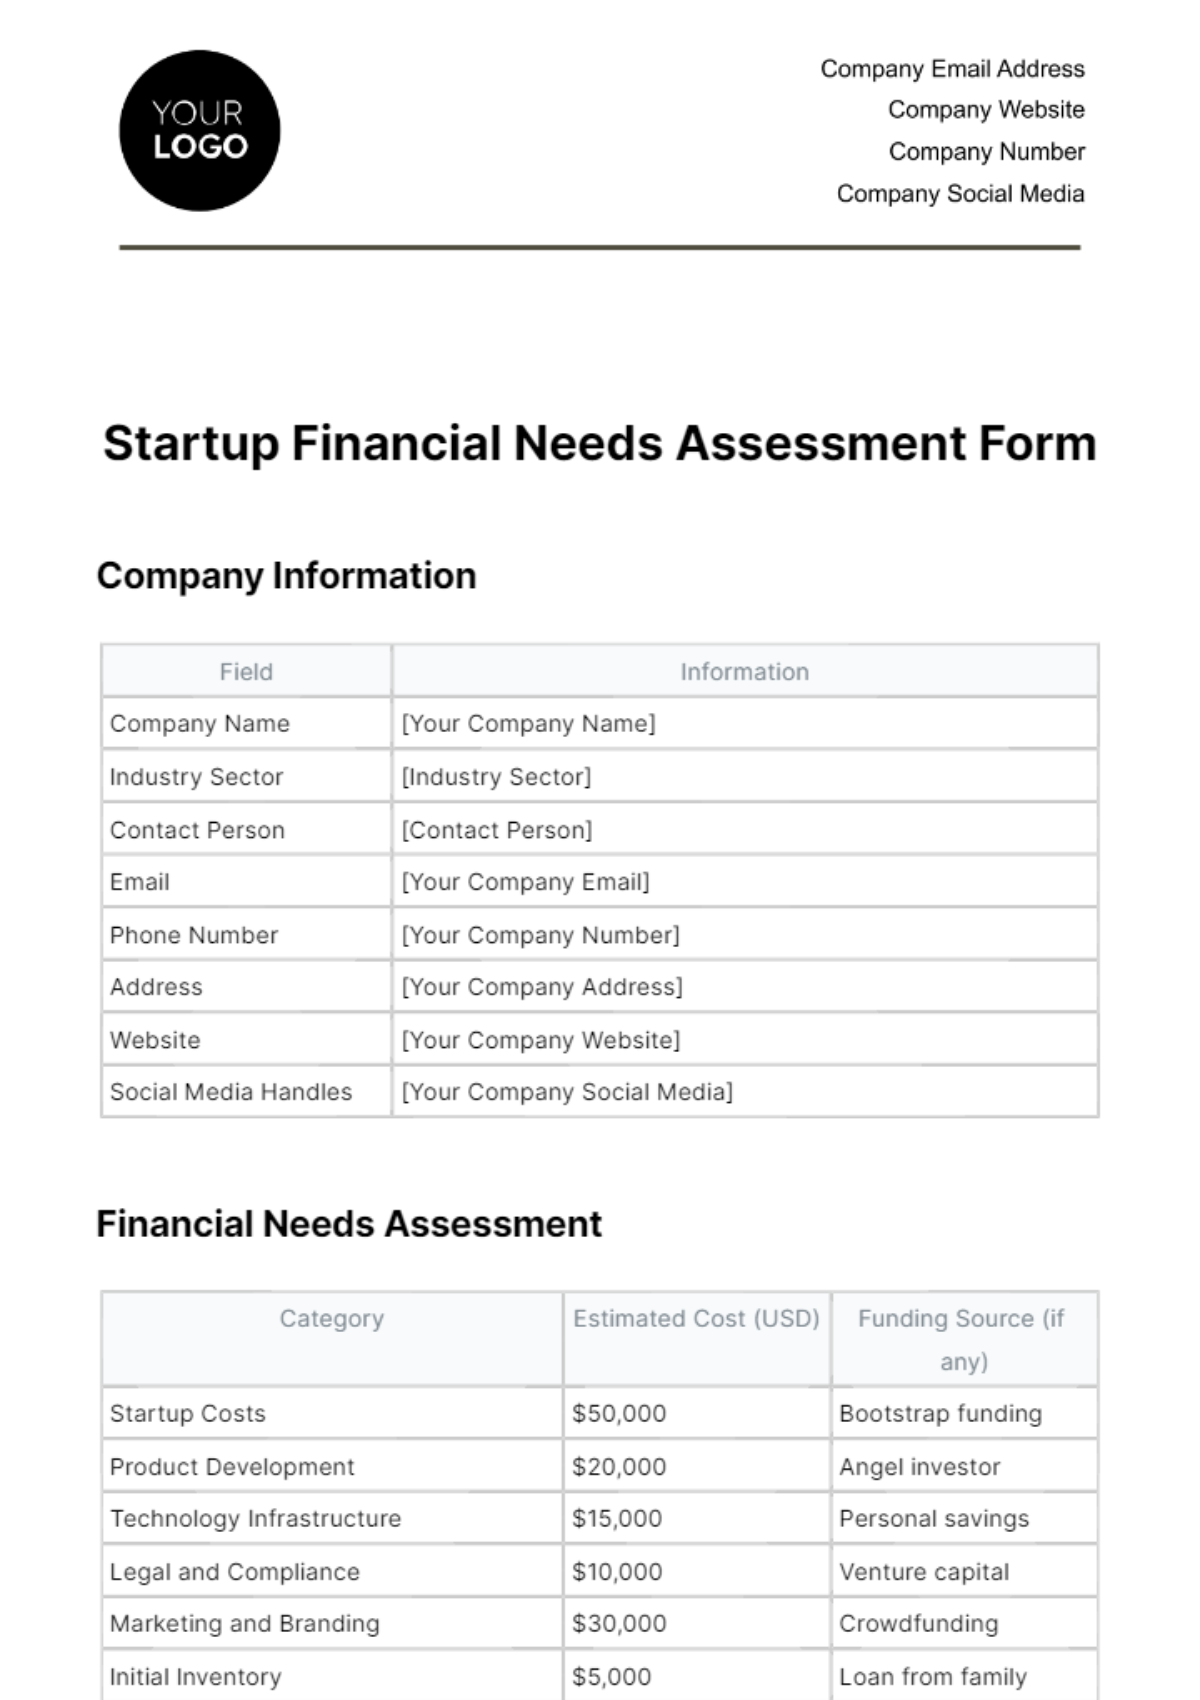 Startup Financial Needs Assessment Form Template